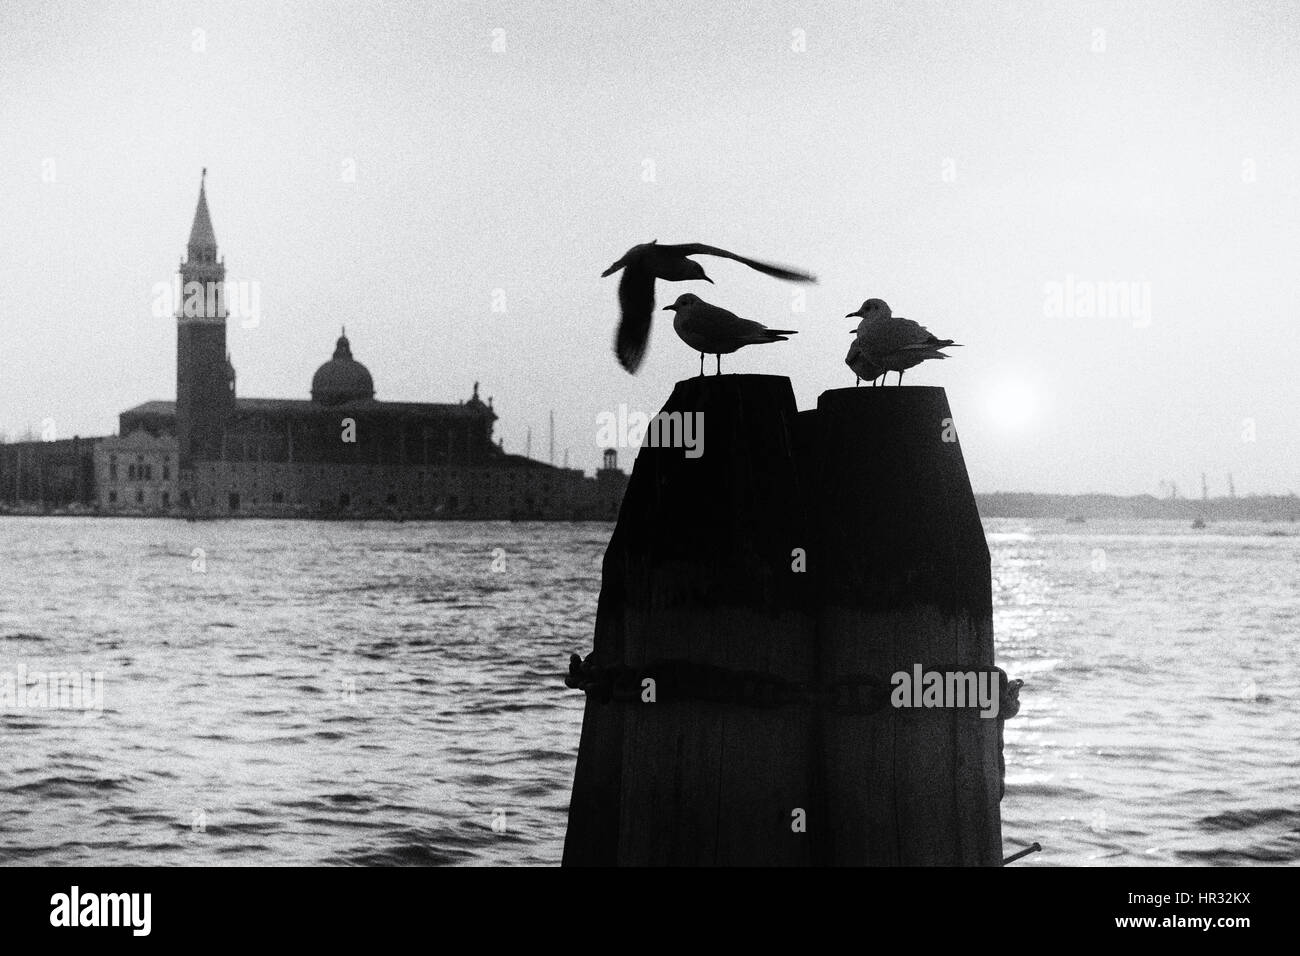 Möwen und die Isola di San Giórgio Maggiore, Venedig, Italien - digital verändert Stockfoto